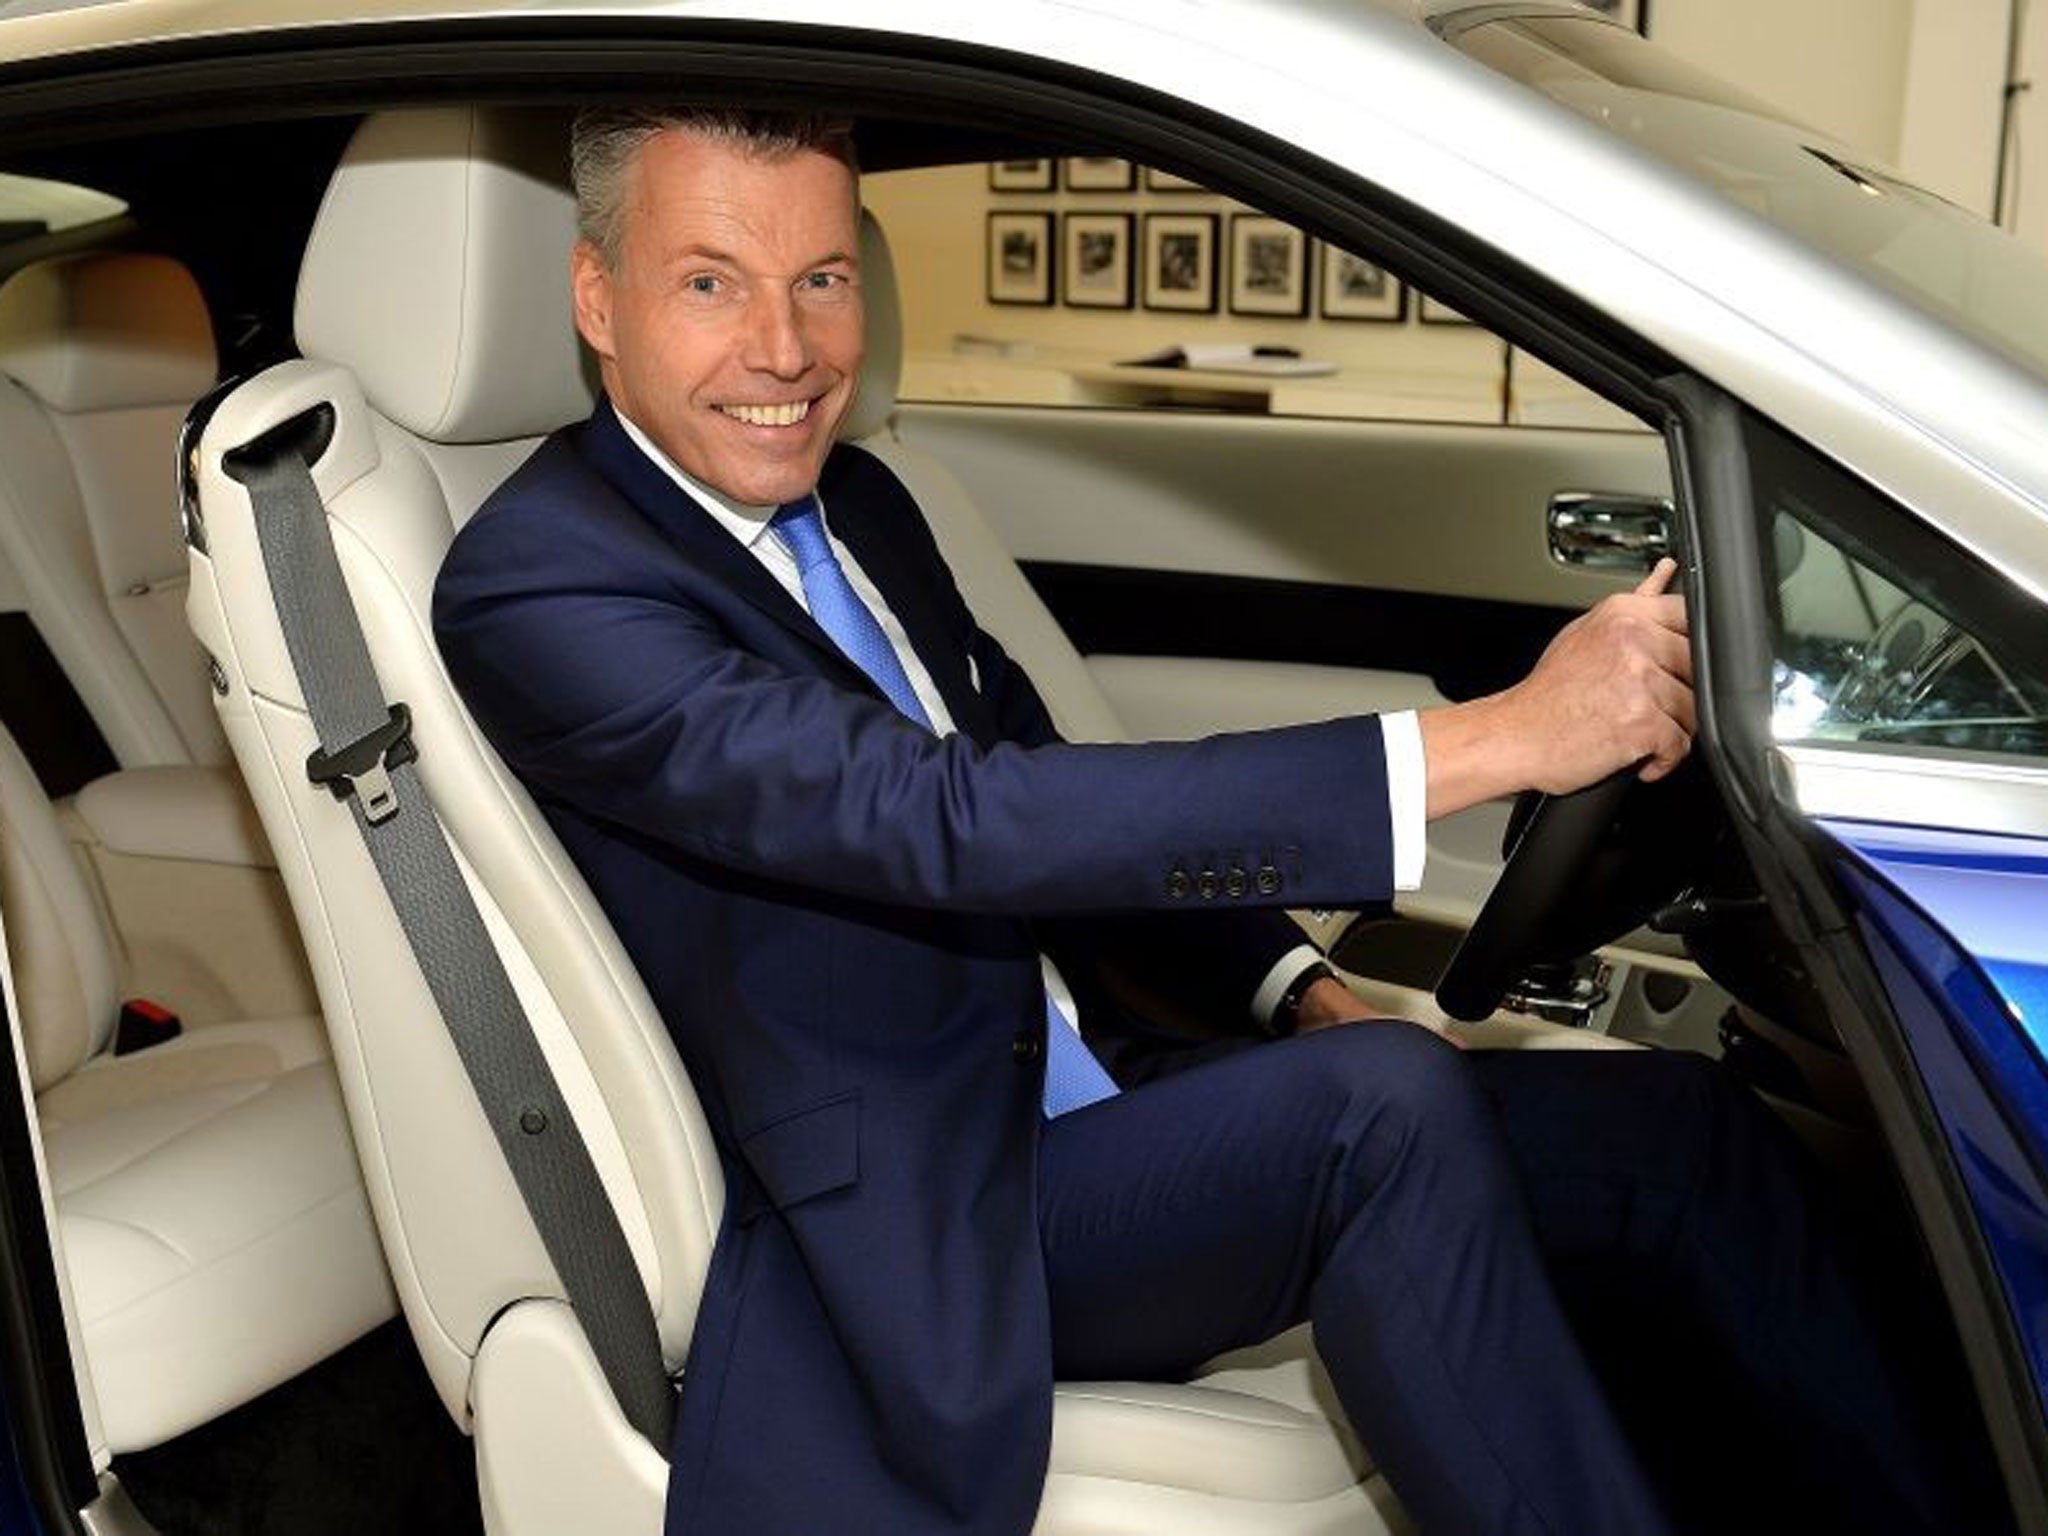 Chief executive of Rolls-Royce Motor Cars Torsten Muller Otvos